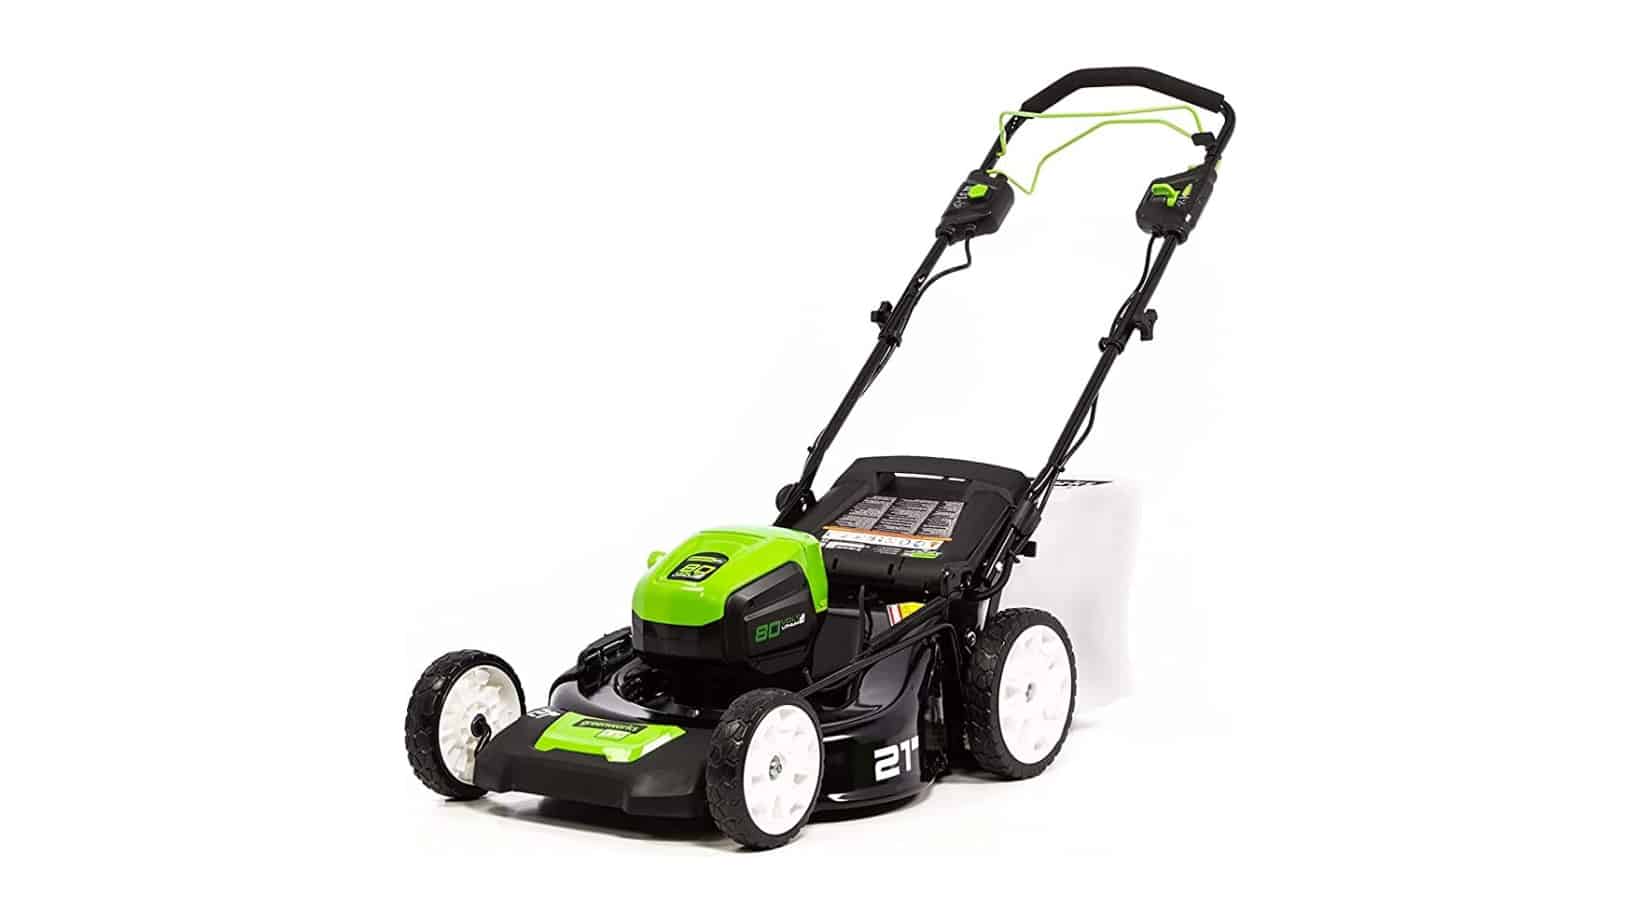 Greenworks PRO 21-Inch 80V Cordless Lawn Mower